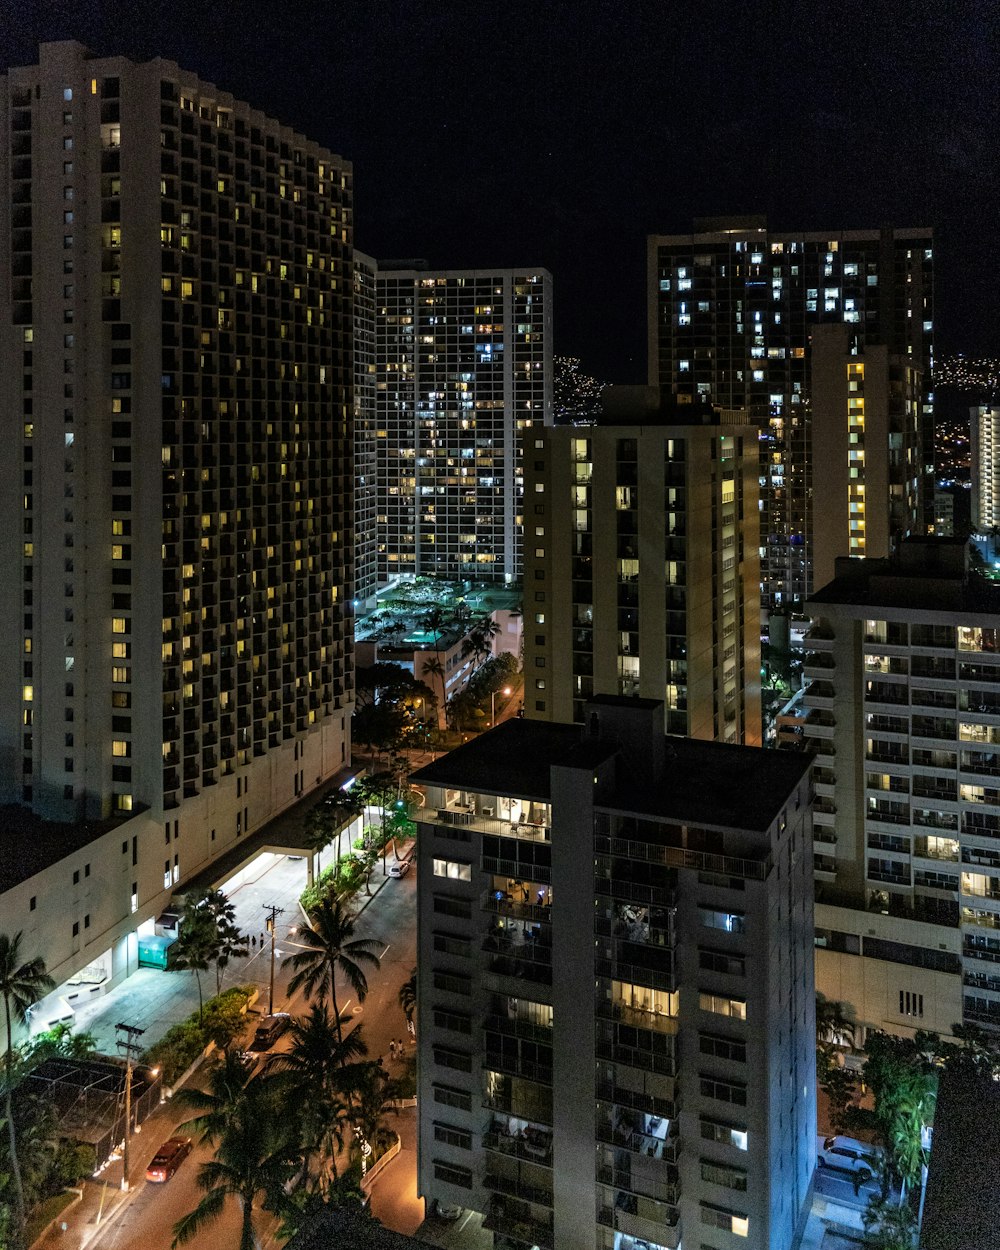 turned on lights on city buildings on nighttime